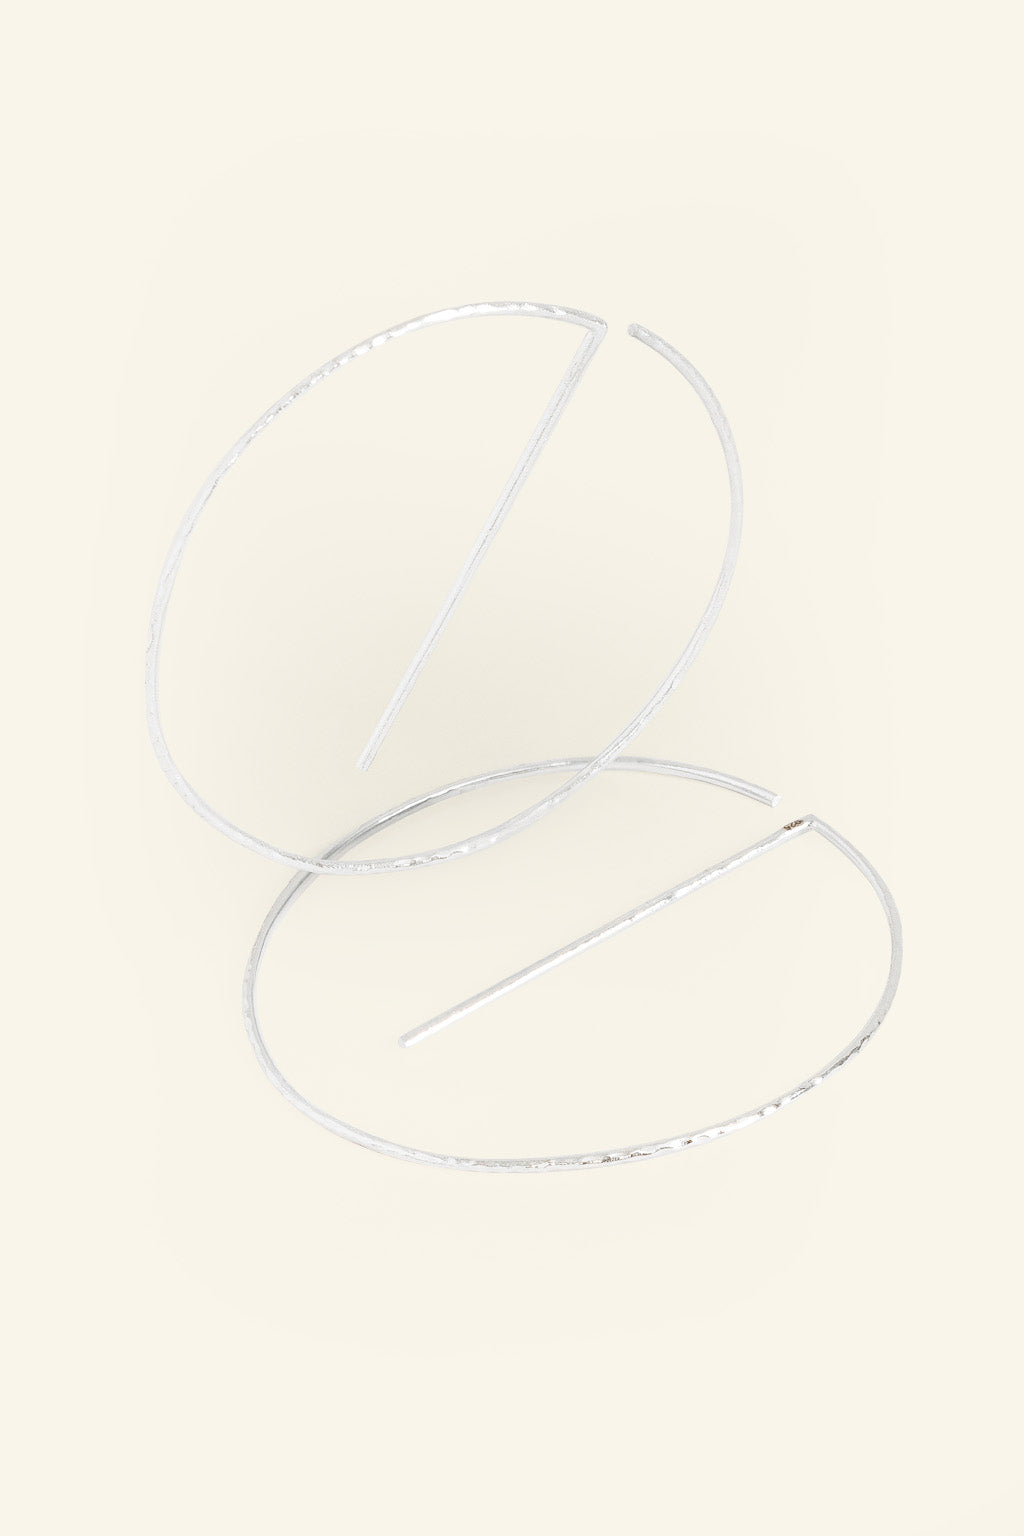 My new worst score on draw a perfect circle (0.3%) : r/JackSucksAtLife